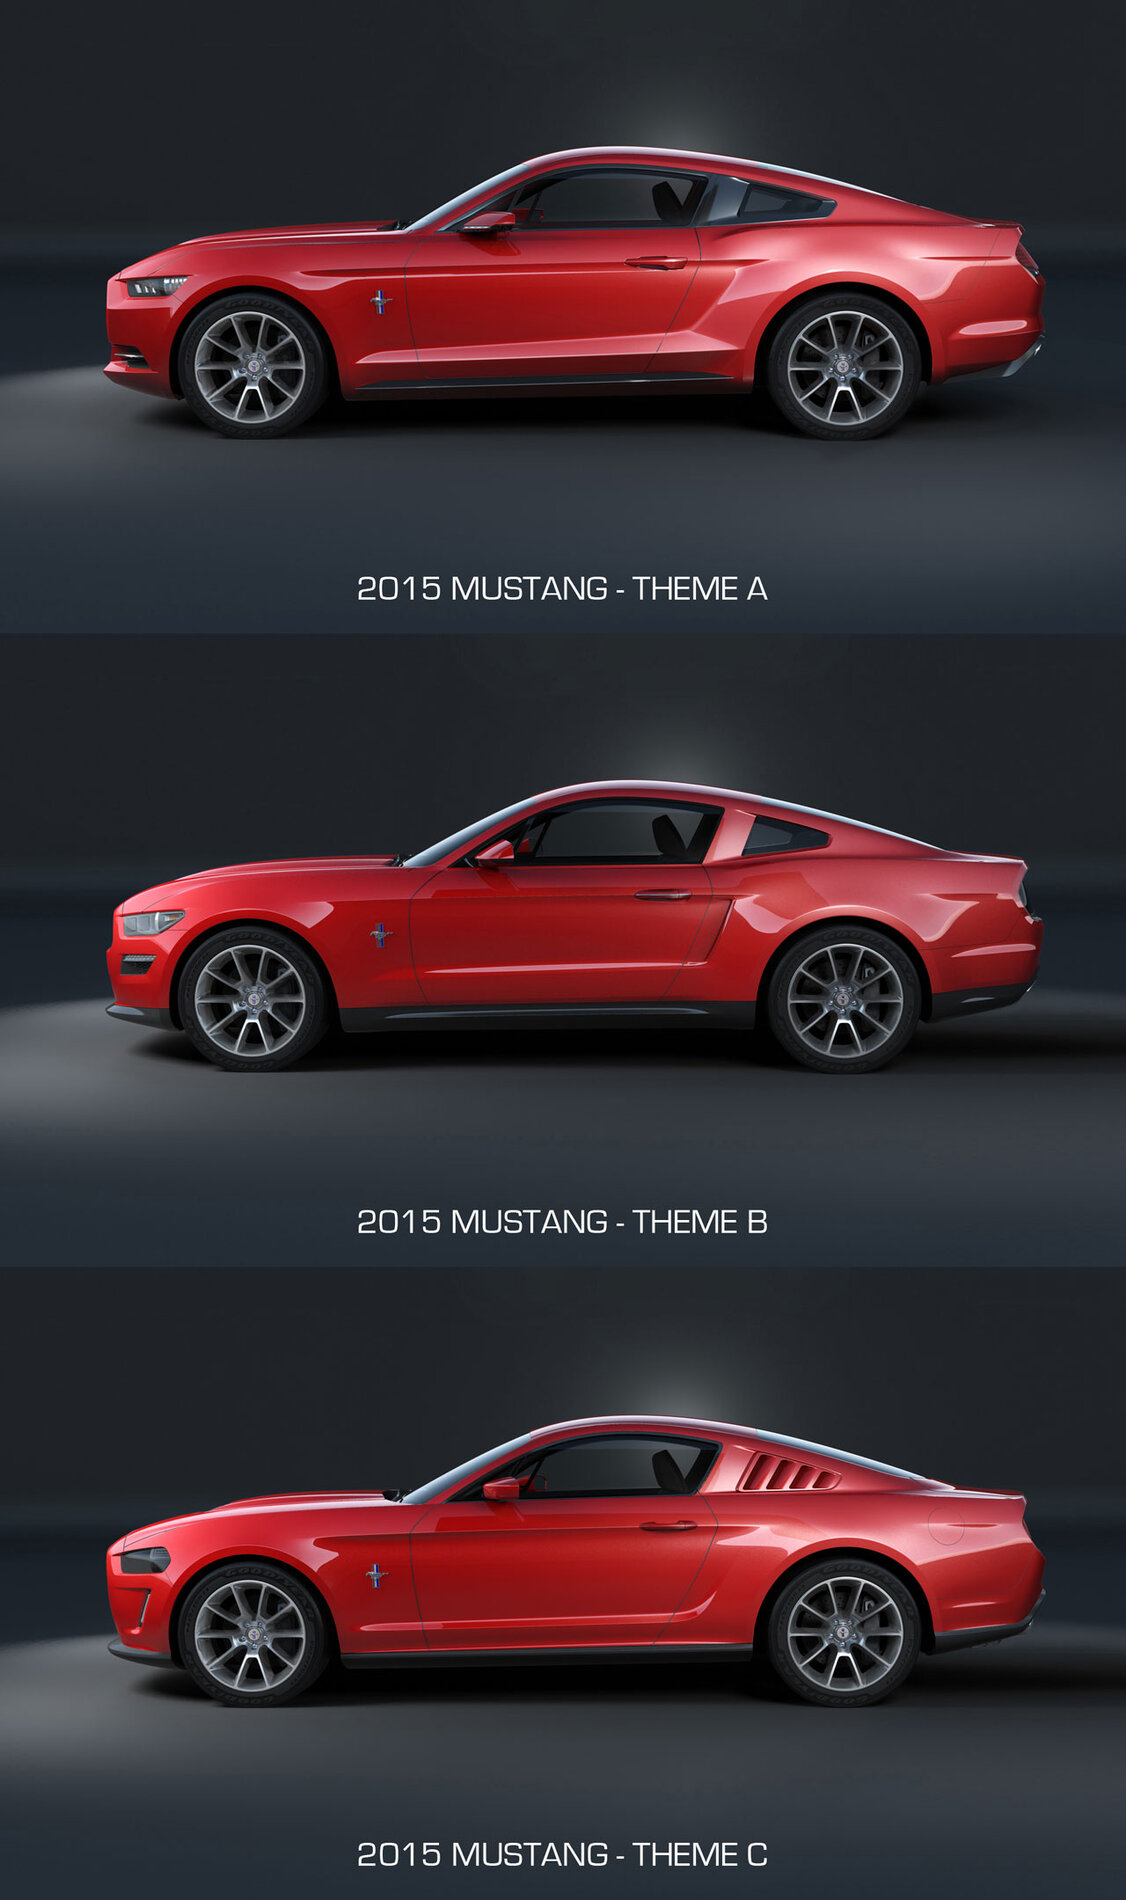 04-2015-Ford-Mustang-Design-Theme-Comparison-Profile (2).jpg